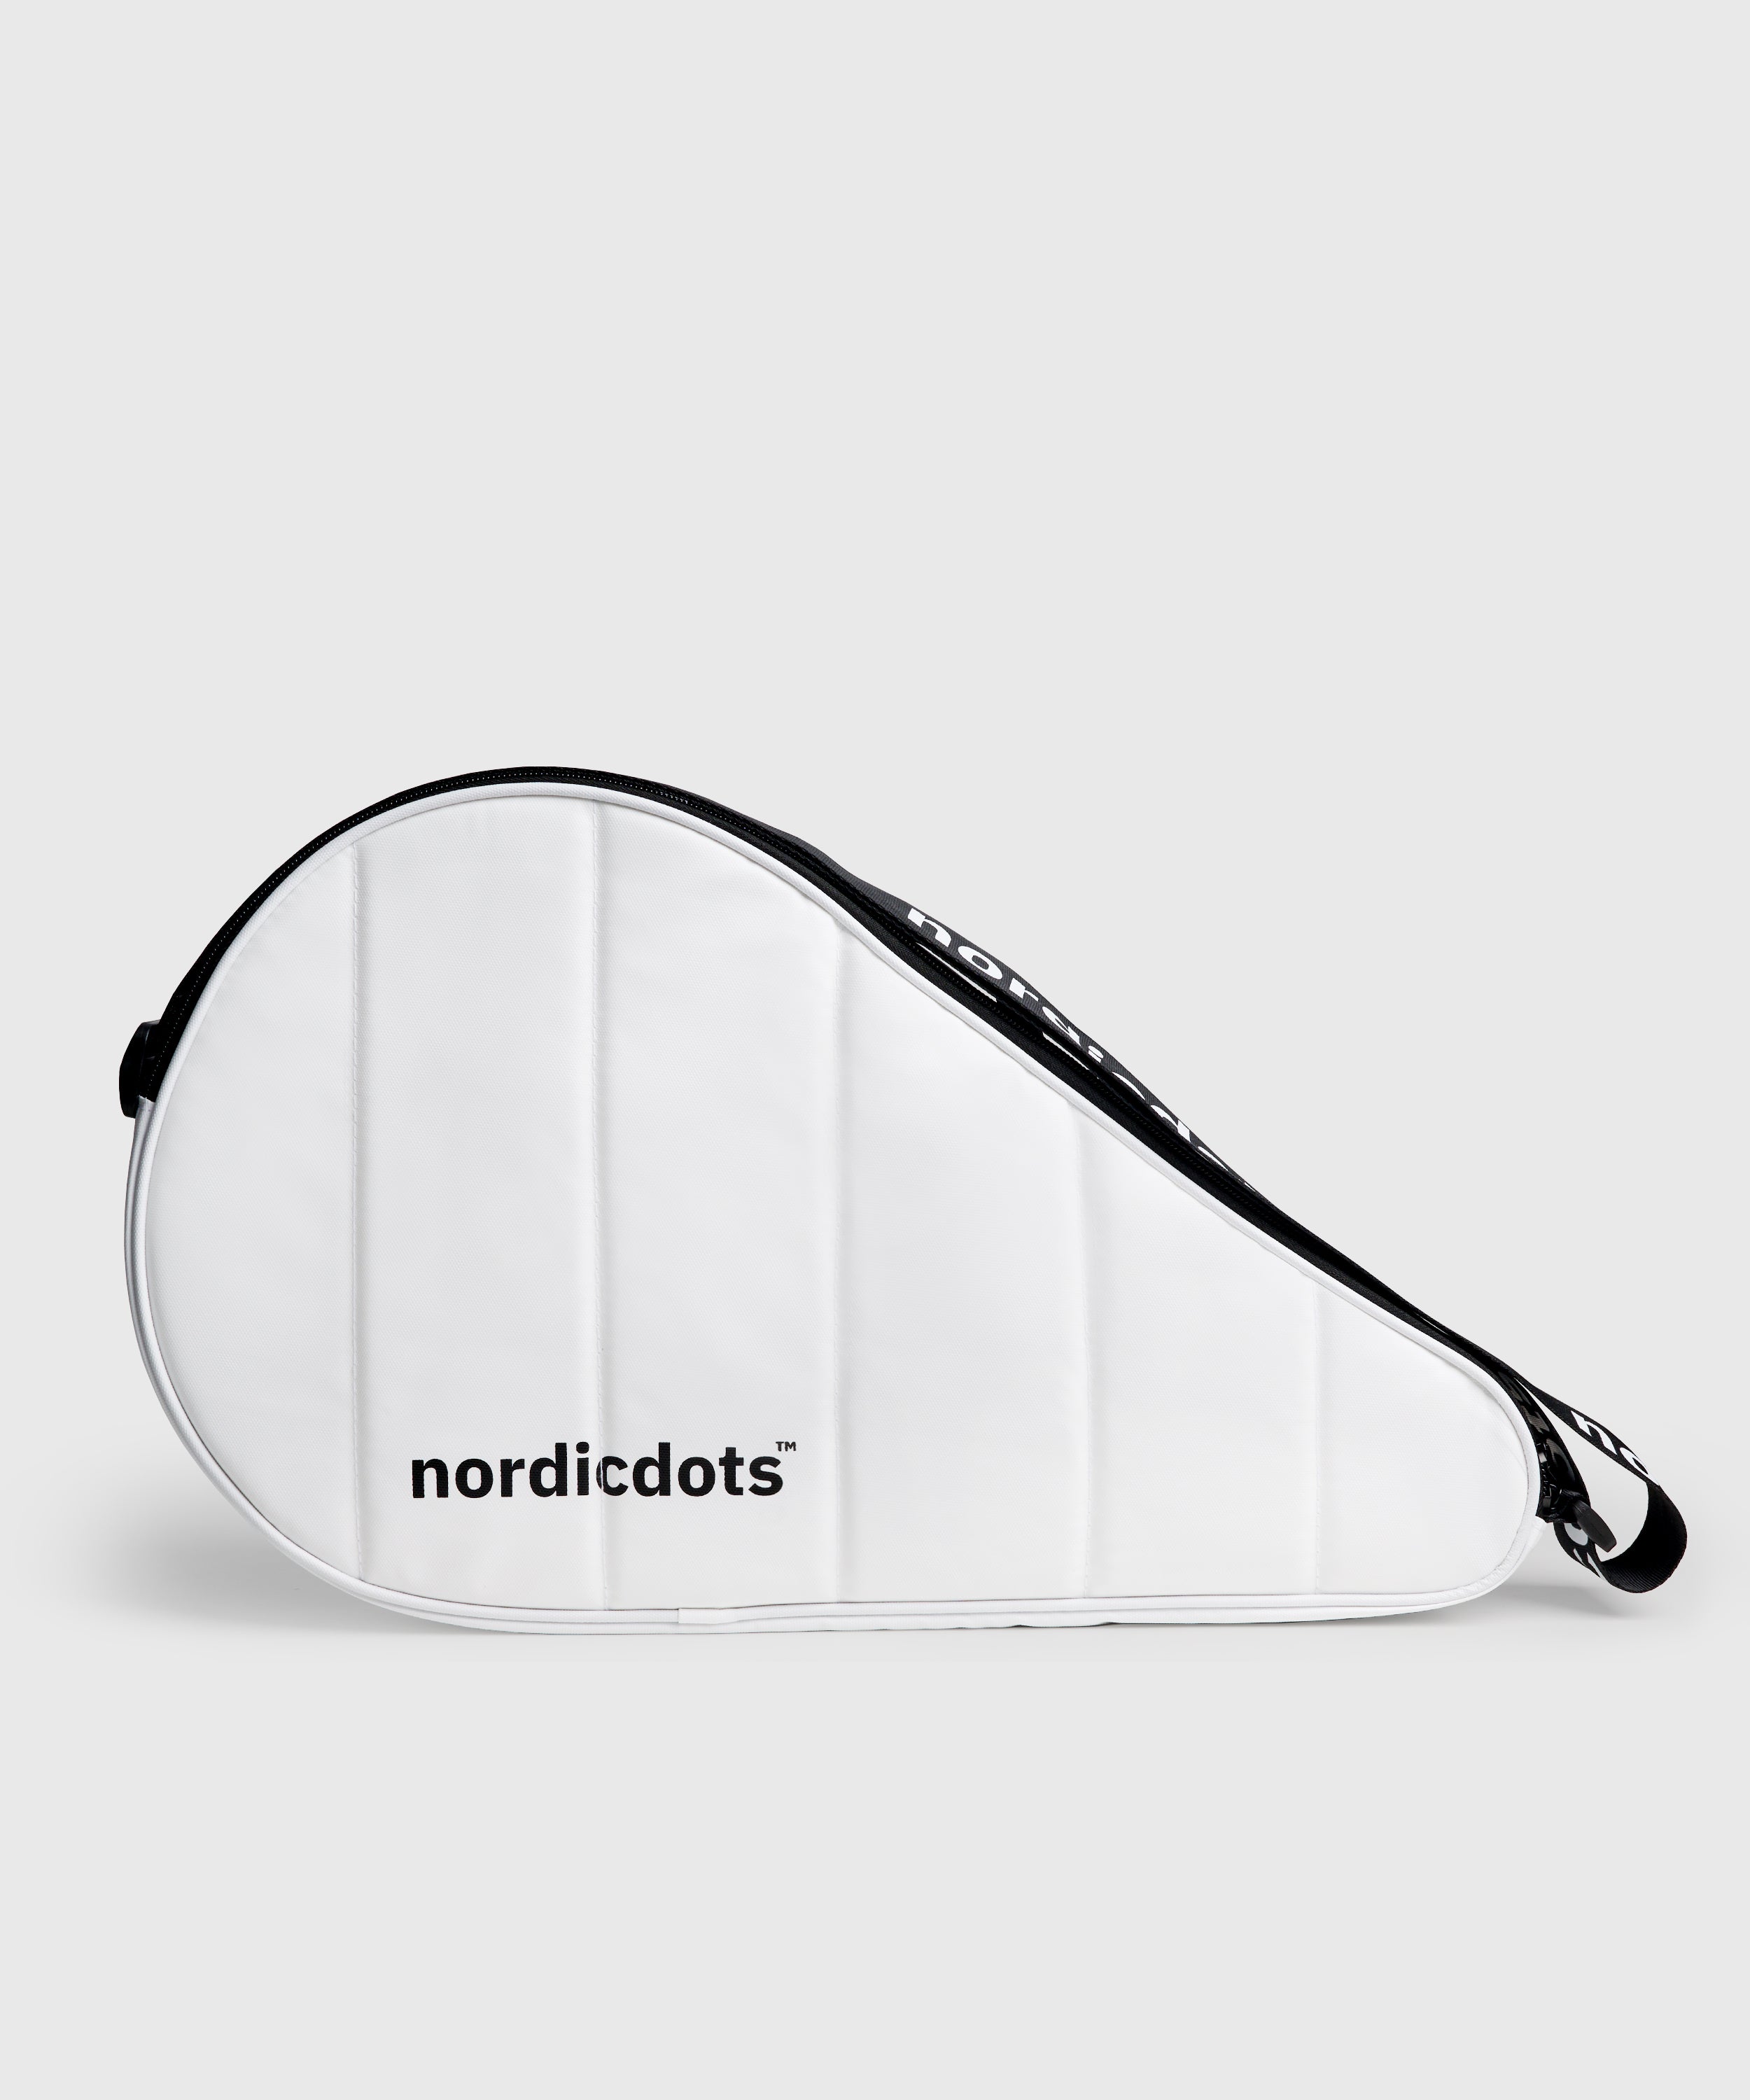 STIGA Racket Sports - Carry Padel Bag is NOW AVAILABLE at stigapadel.com -  link in bio! ✨ ​. ​#newpadelbag #newin #padelproduct #padelbag  #carrypadelbag #olivegreen #padelrack #stigapadel #hildebrandsweden #design  | Facebook